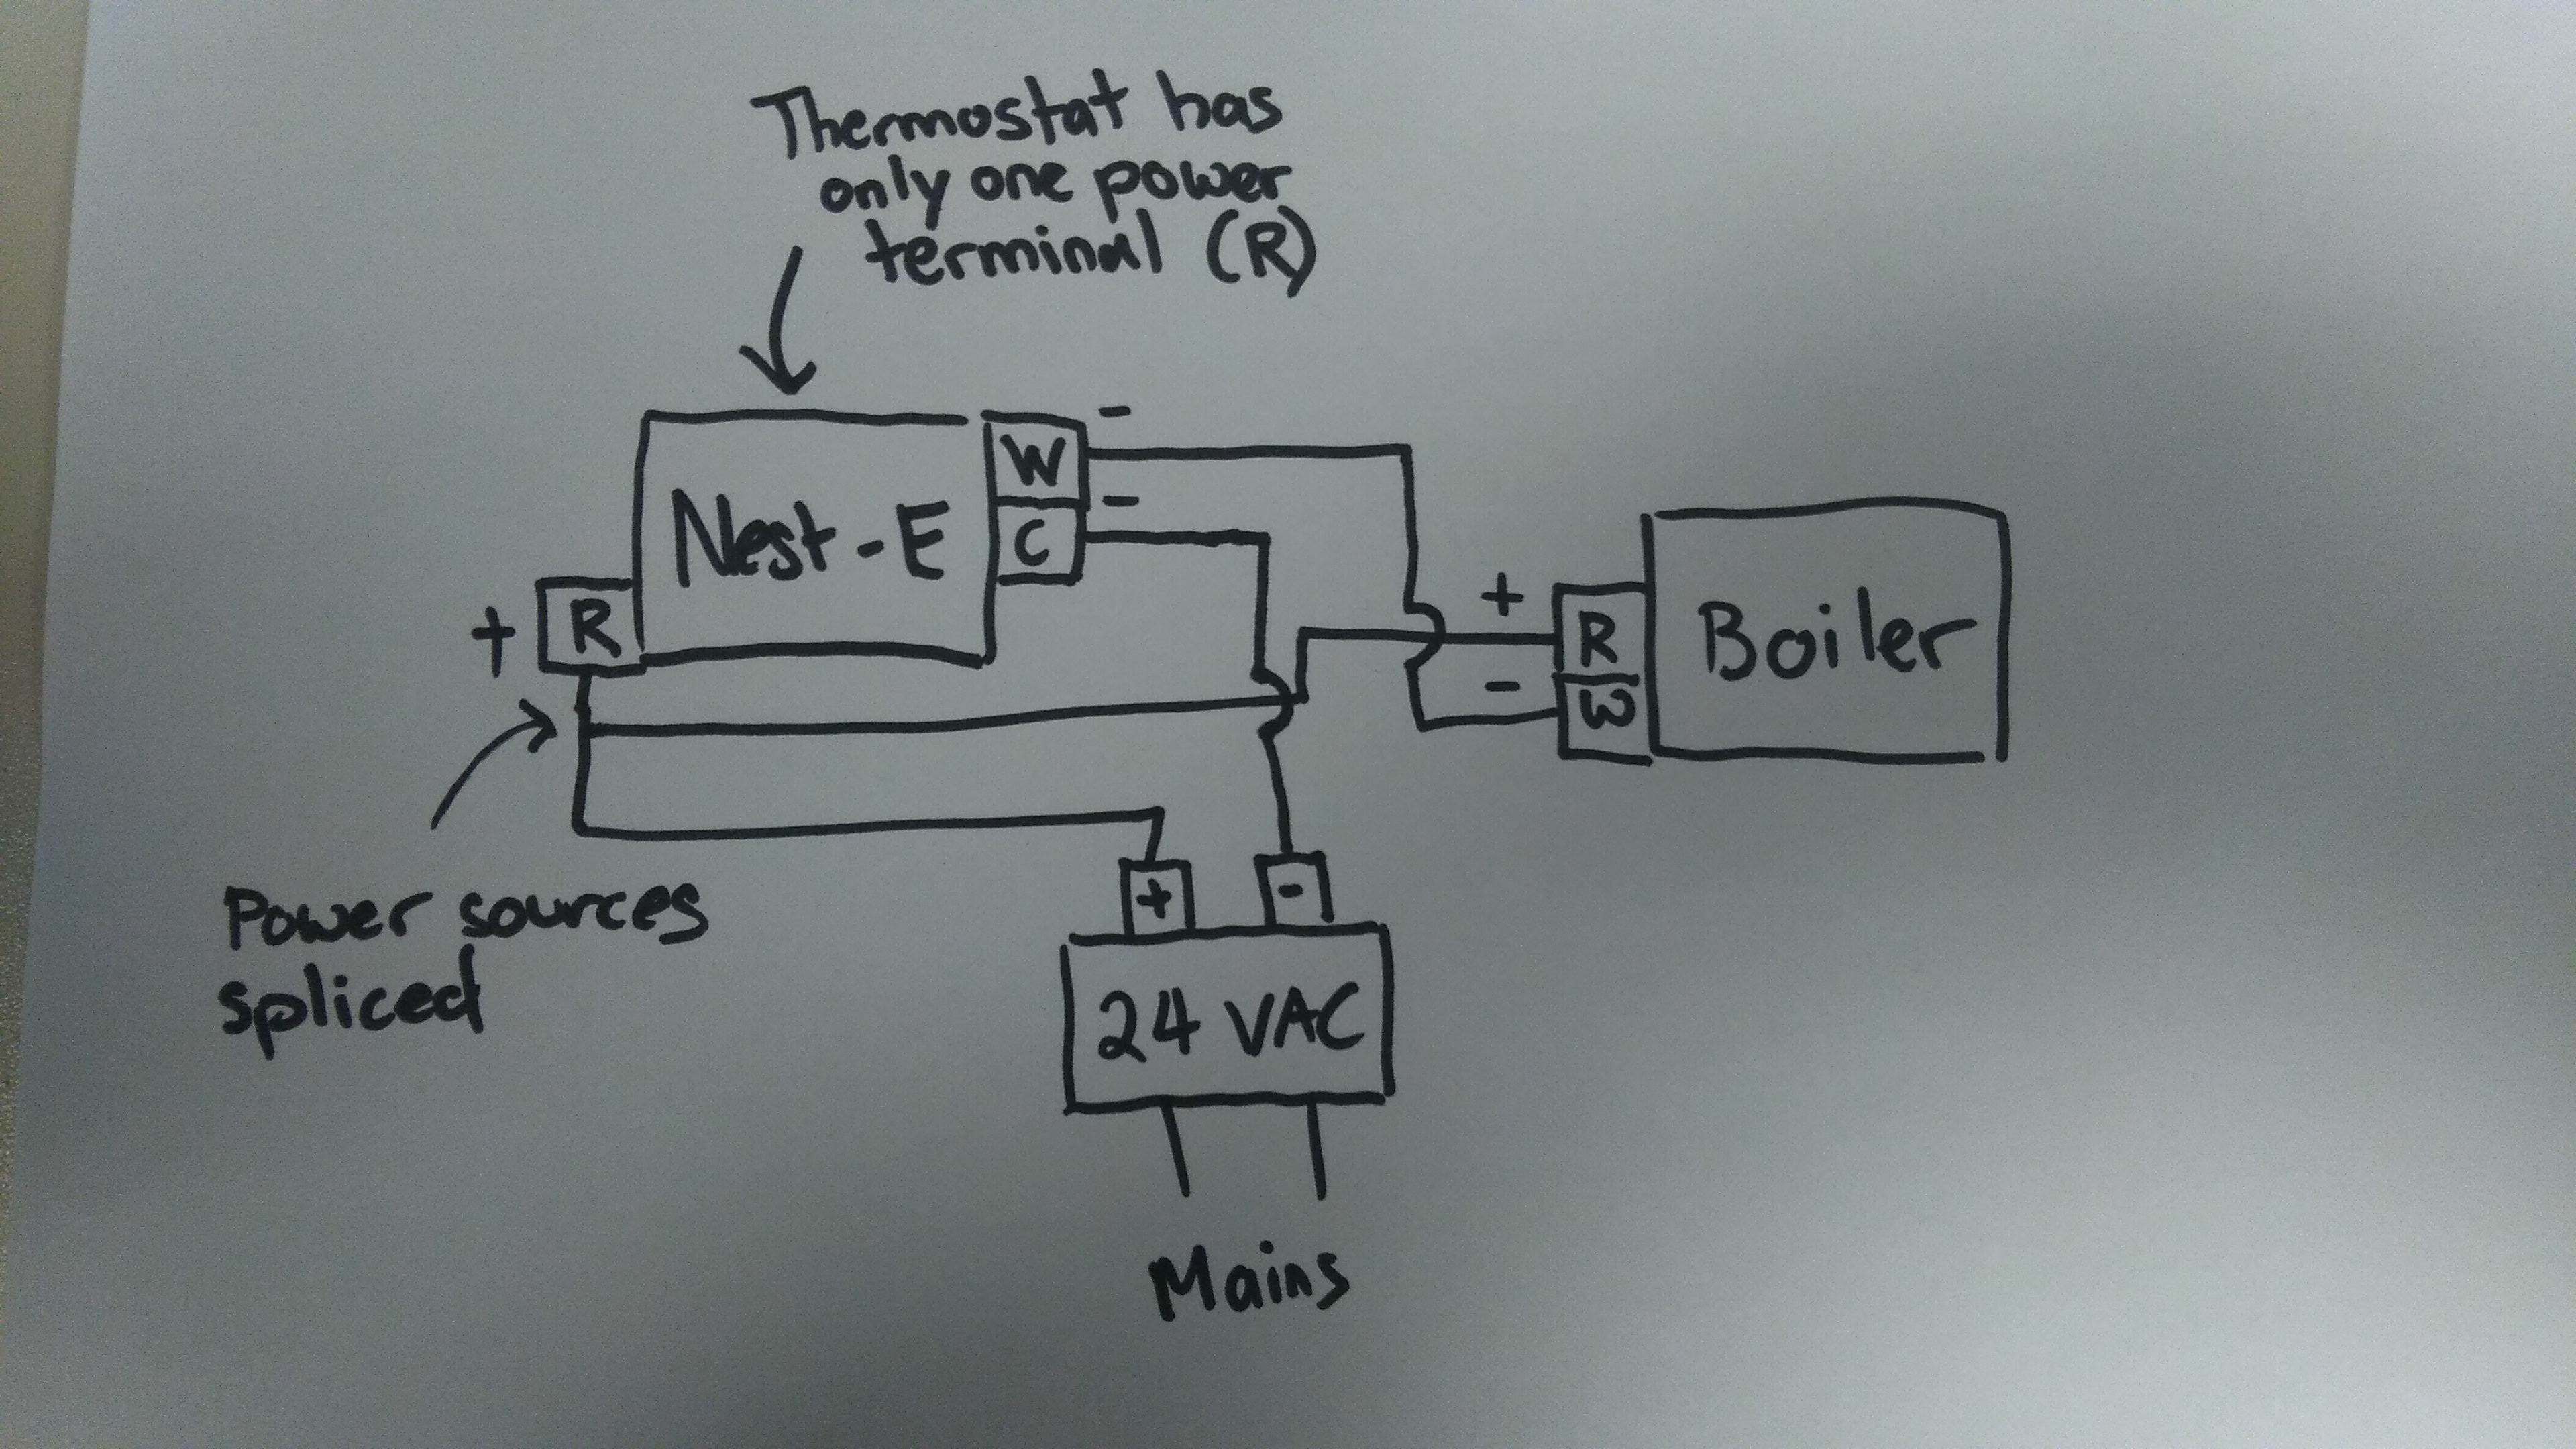 Nest E 2 Wire Heat Only Boiler With 24 Volt Transformer Google Nest Community